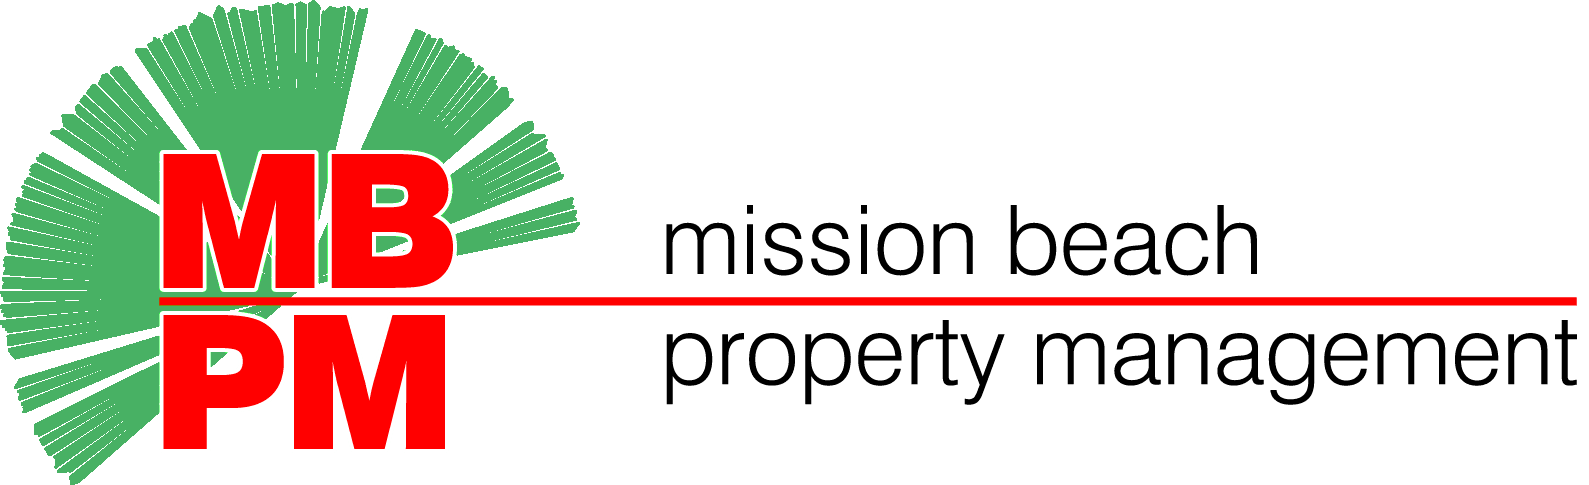 Mission Beach Property Management: Rental Management Services